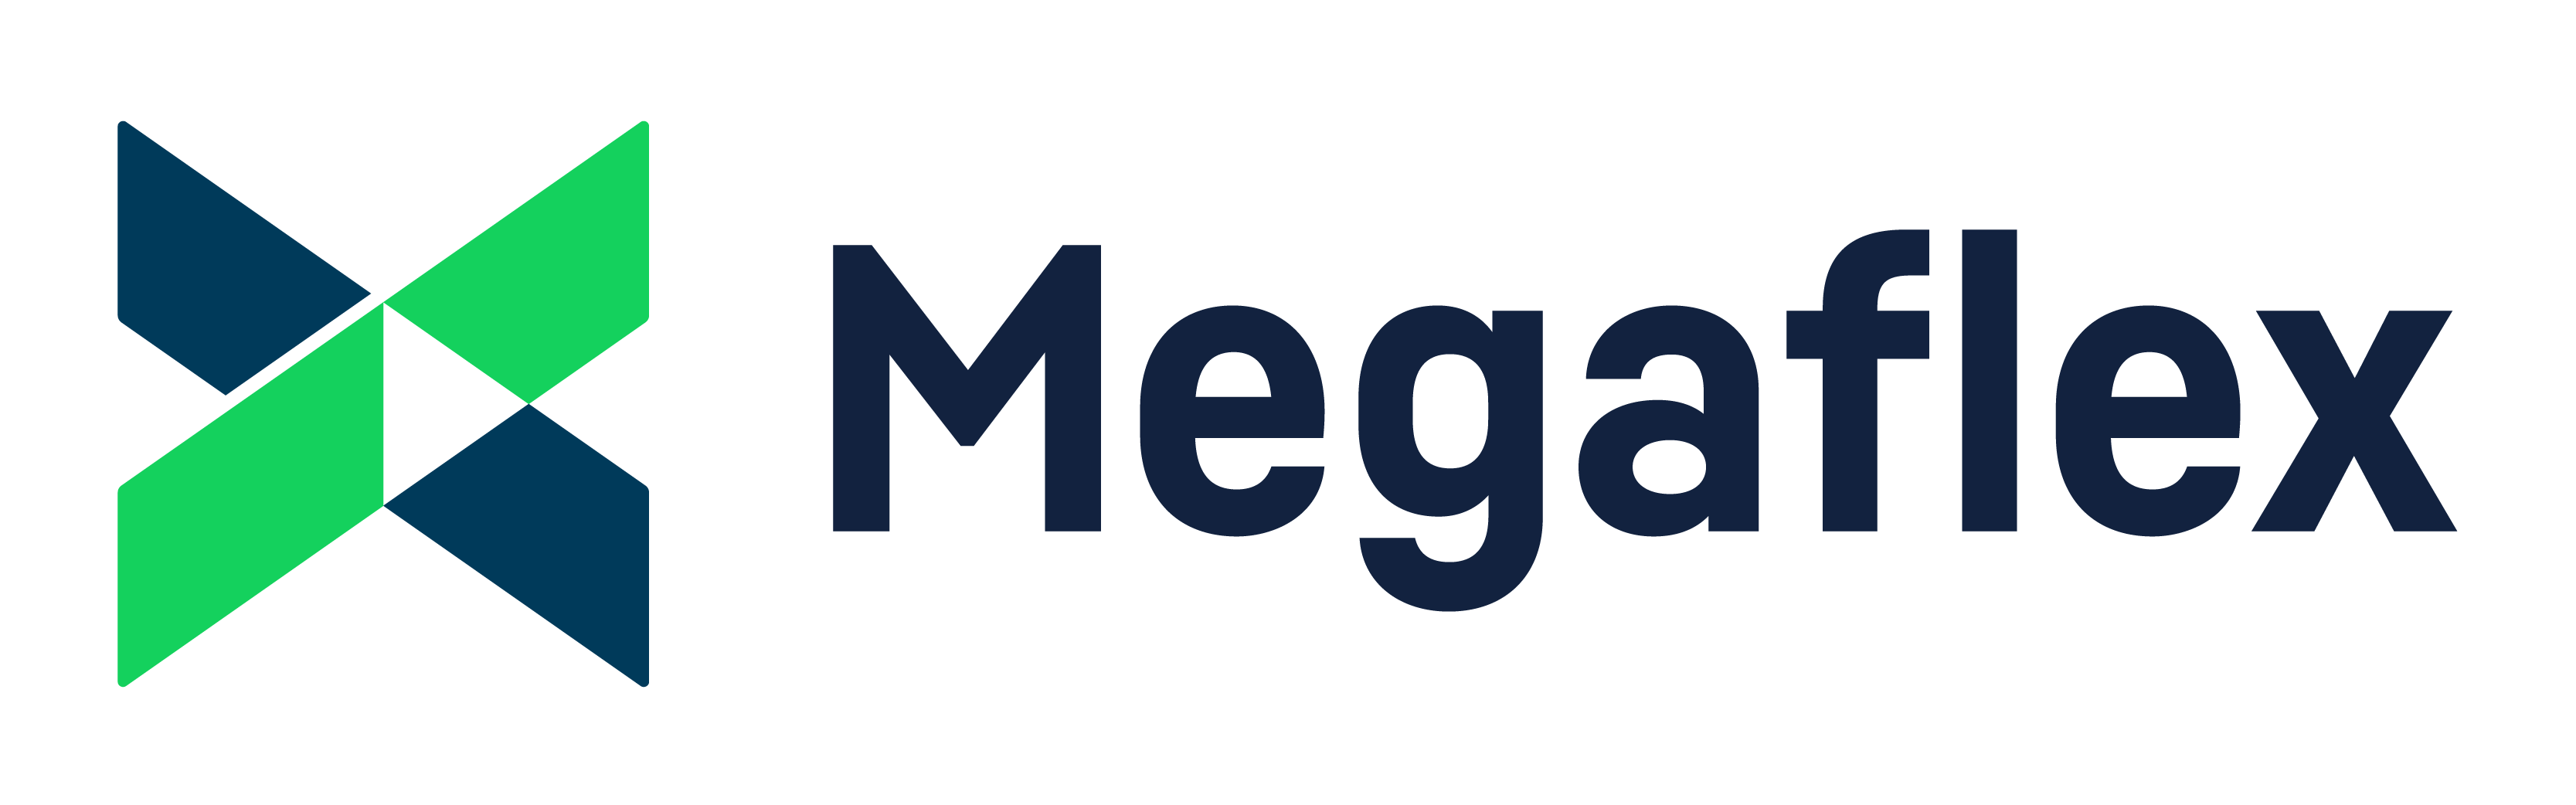 Megalflex_Logo_RGB